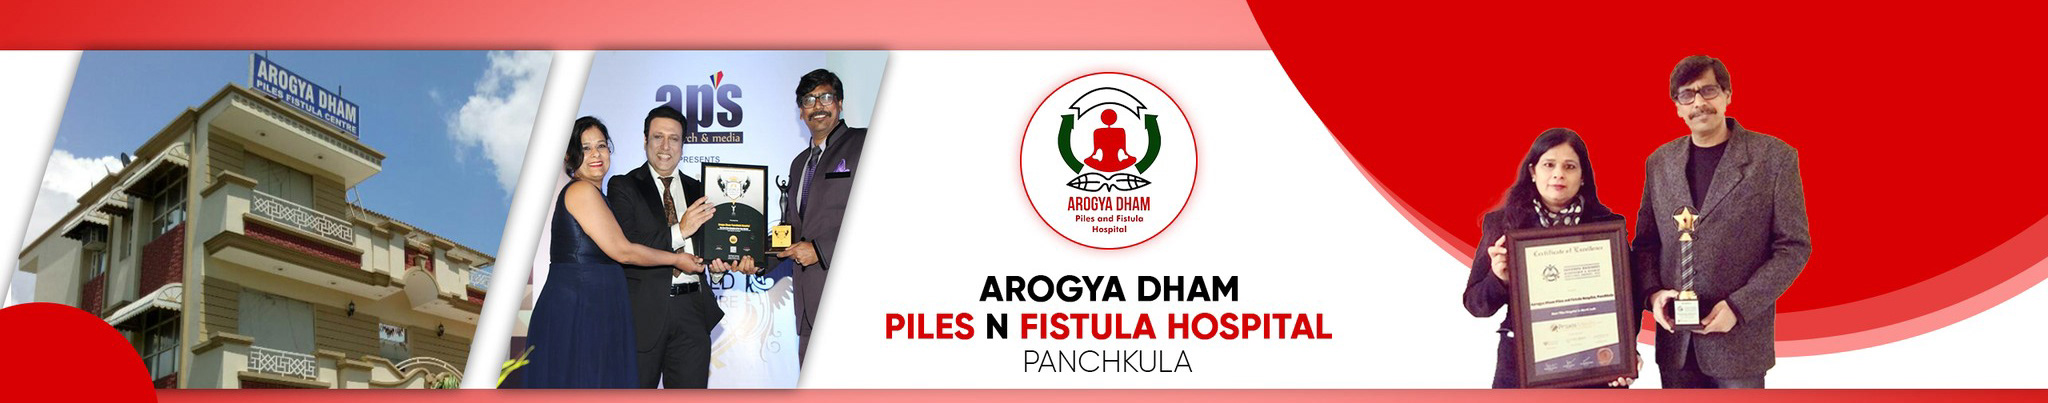 Баннер профиля Arogya Dham Pkl